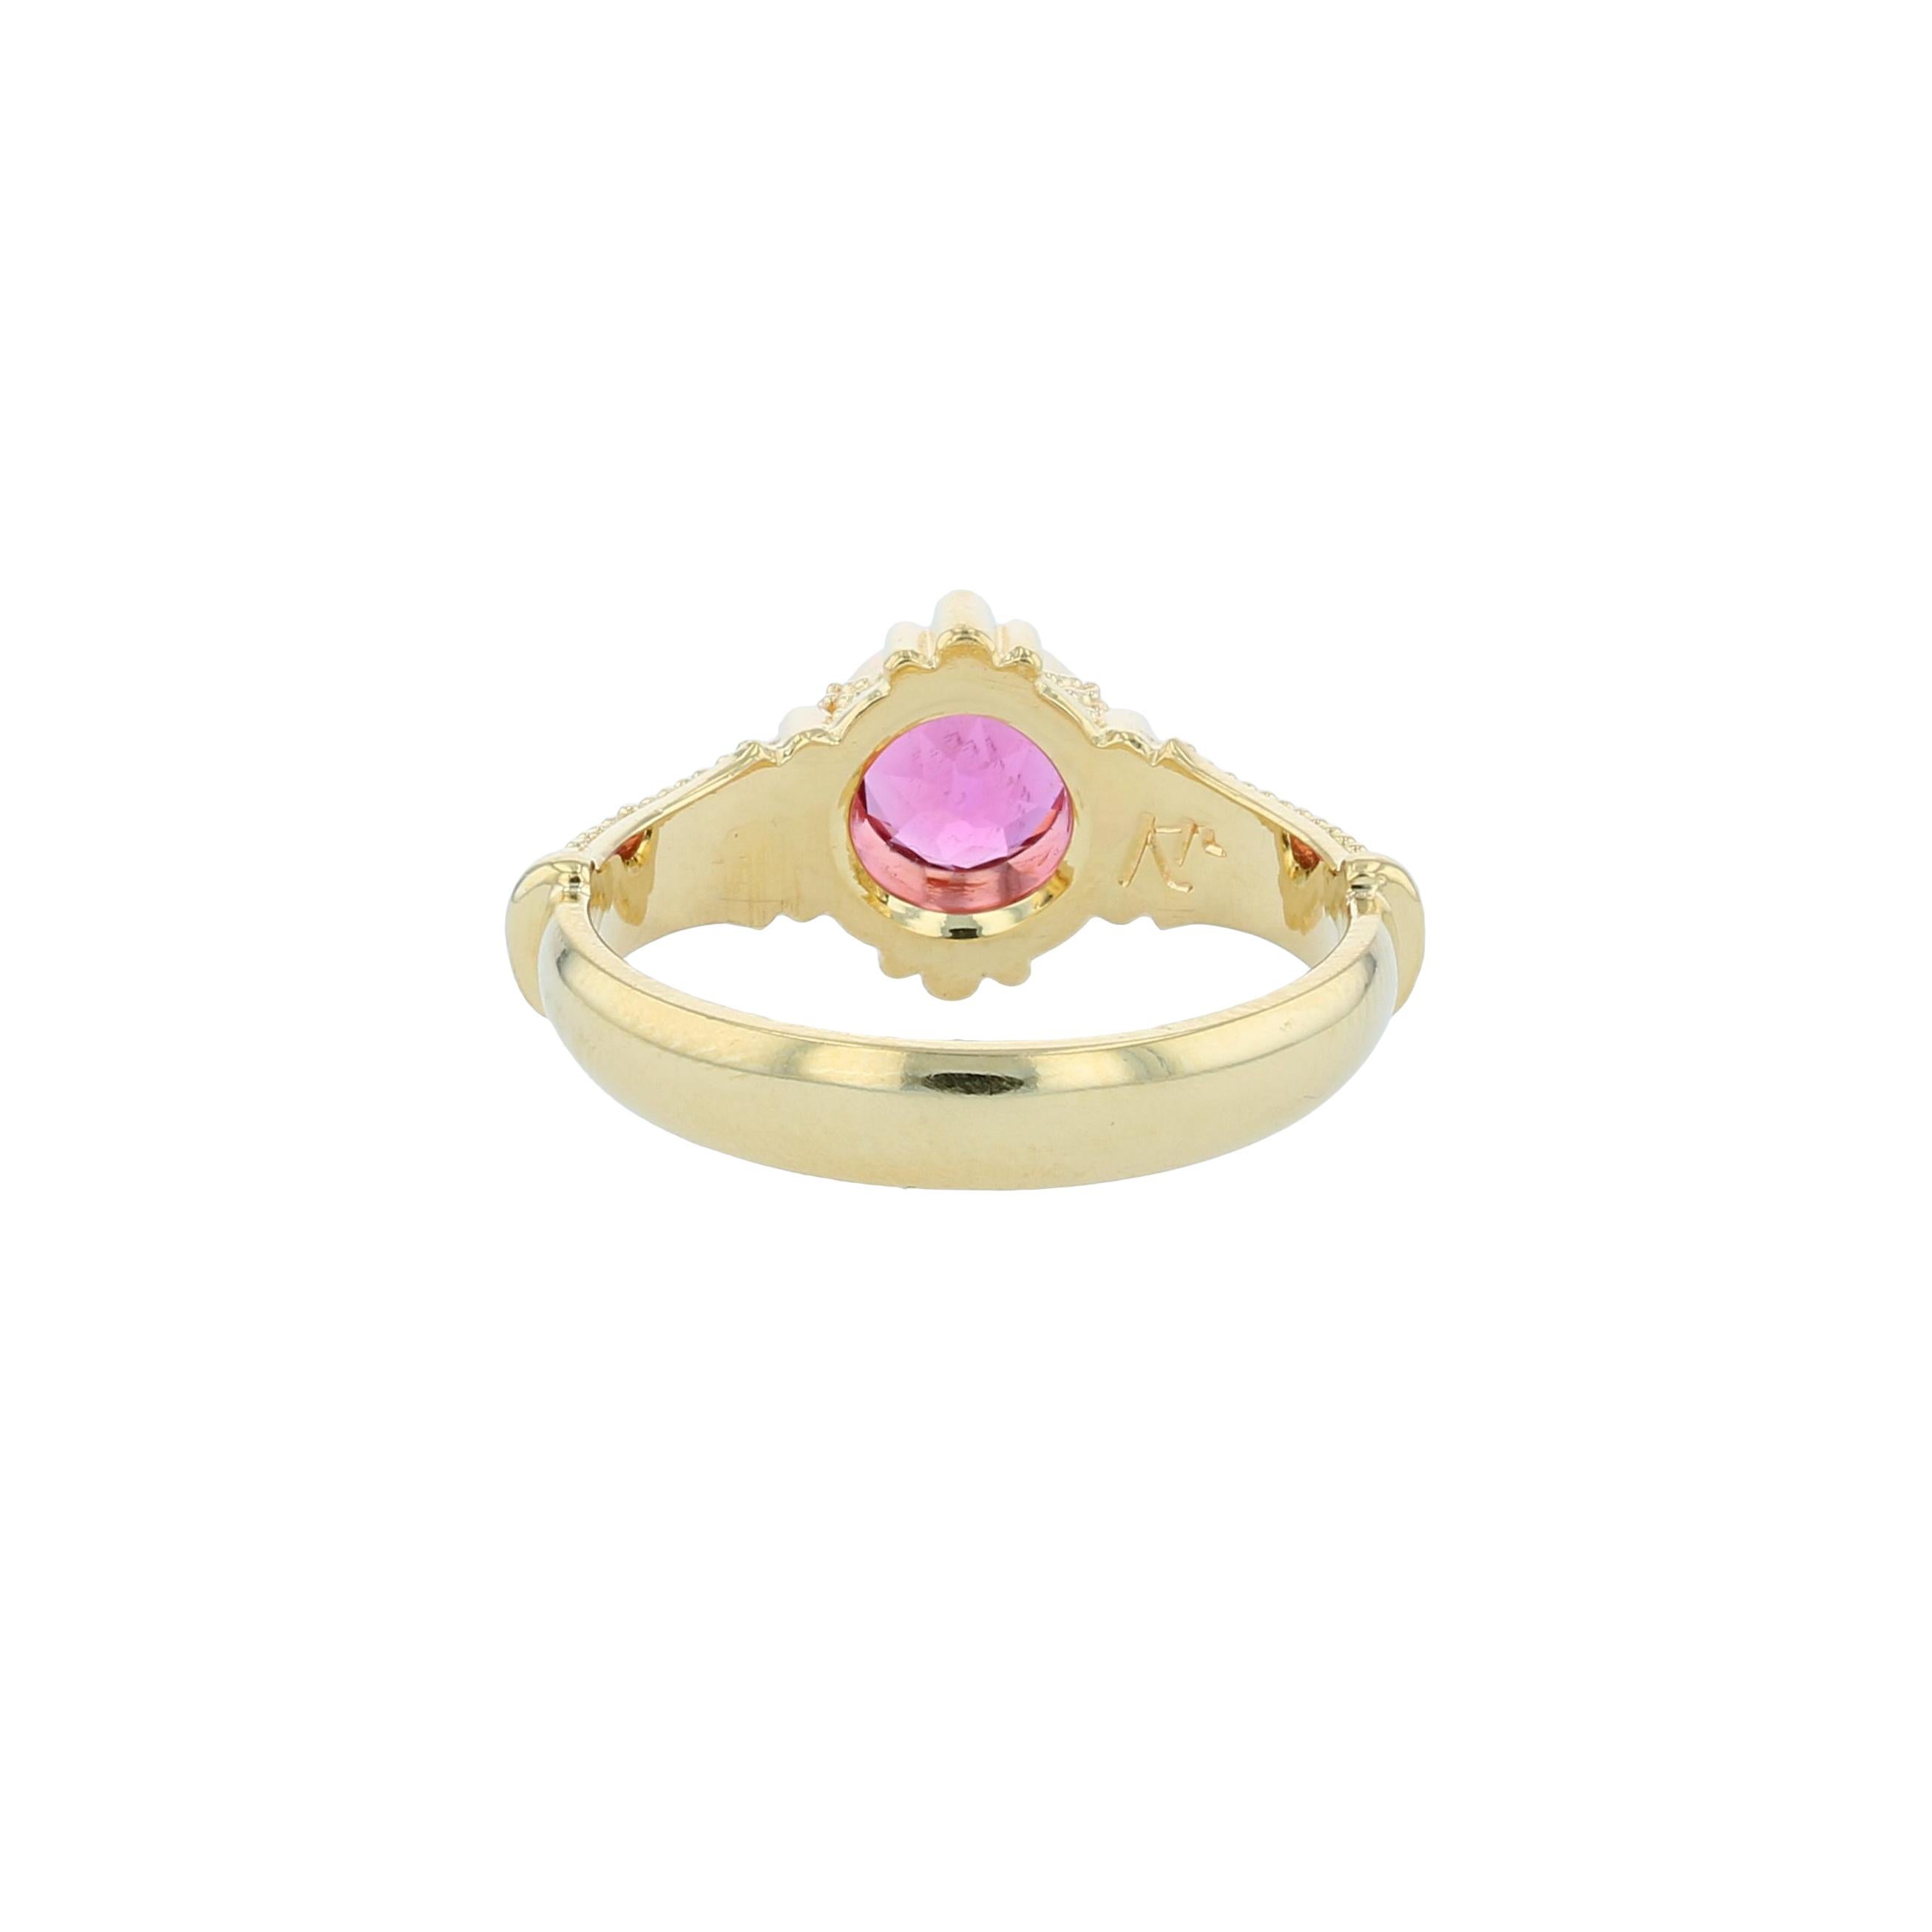 Kent Raible 18 Karat Gold Pink Tourmaline Solitaire Ring with Fine Granulation 1